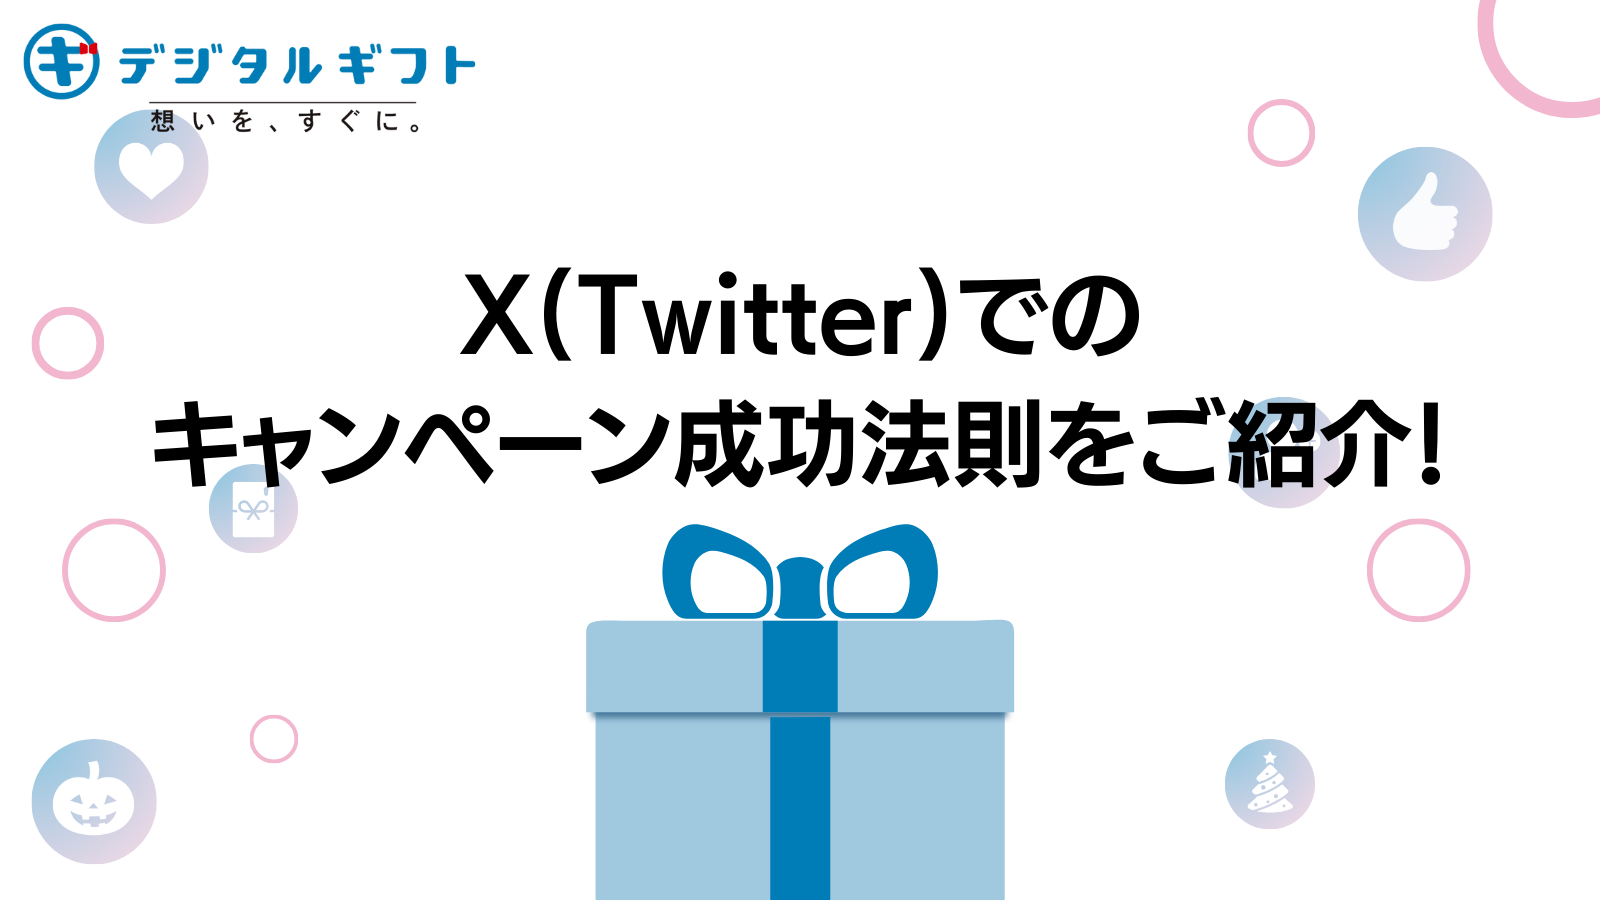 X(Twitter)でのキャンペーン成功法則をご紹介！